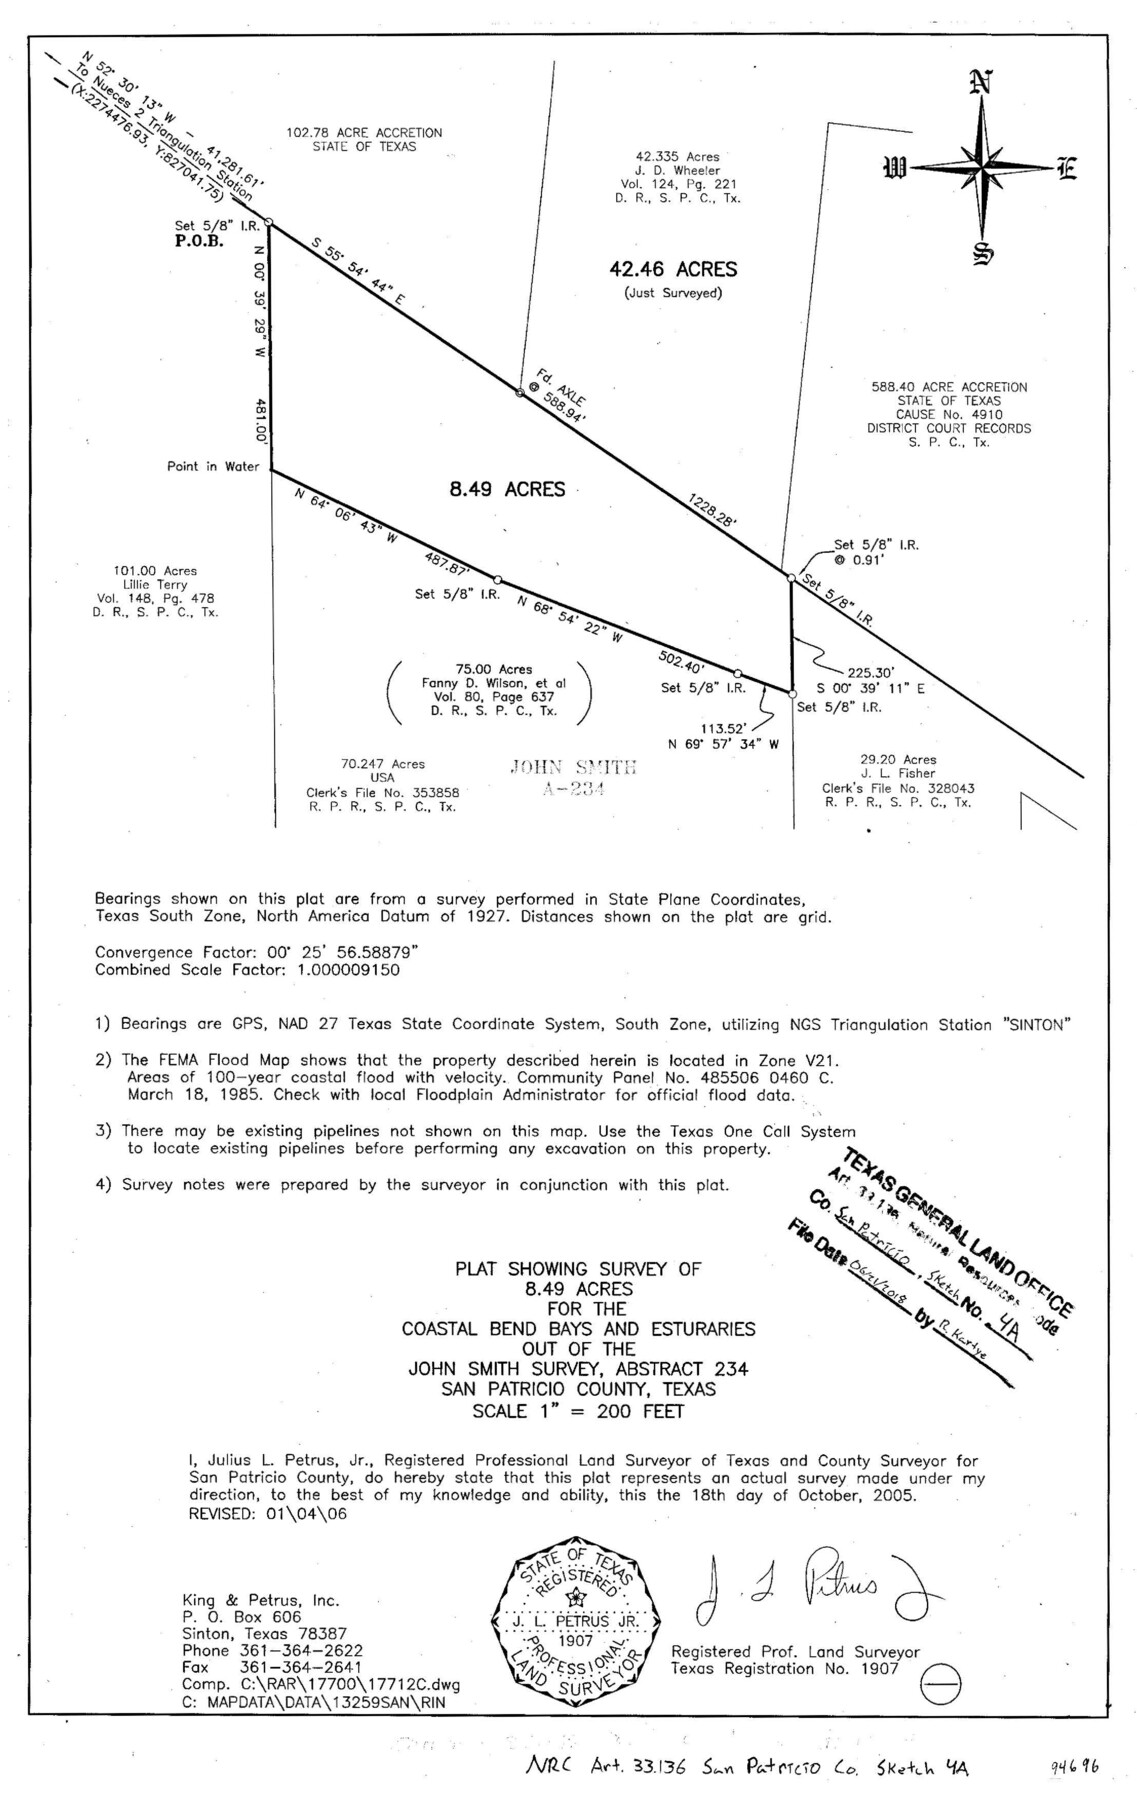 94696, San Patricio County NRC Article 33.136 Sketch 4A, General Map Collection